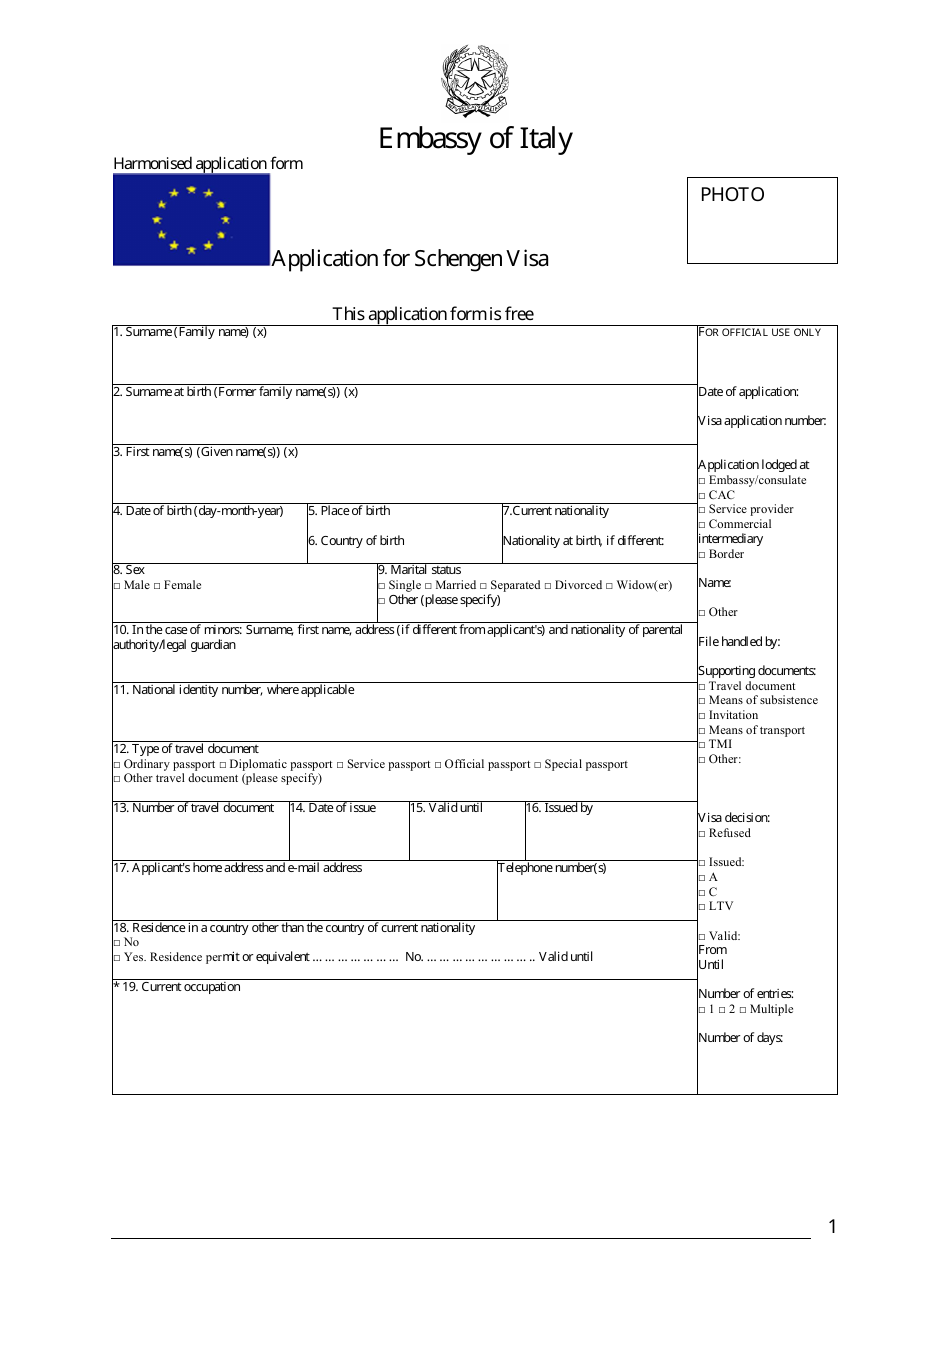 Schengen Visa Application Form - Embassy of Italy, Page 1